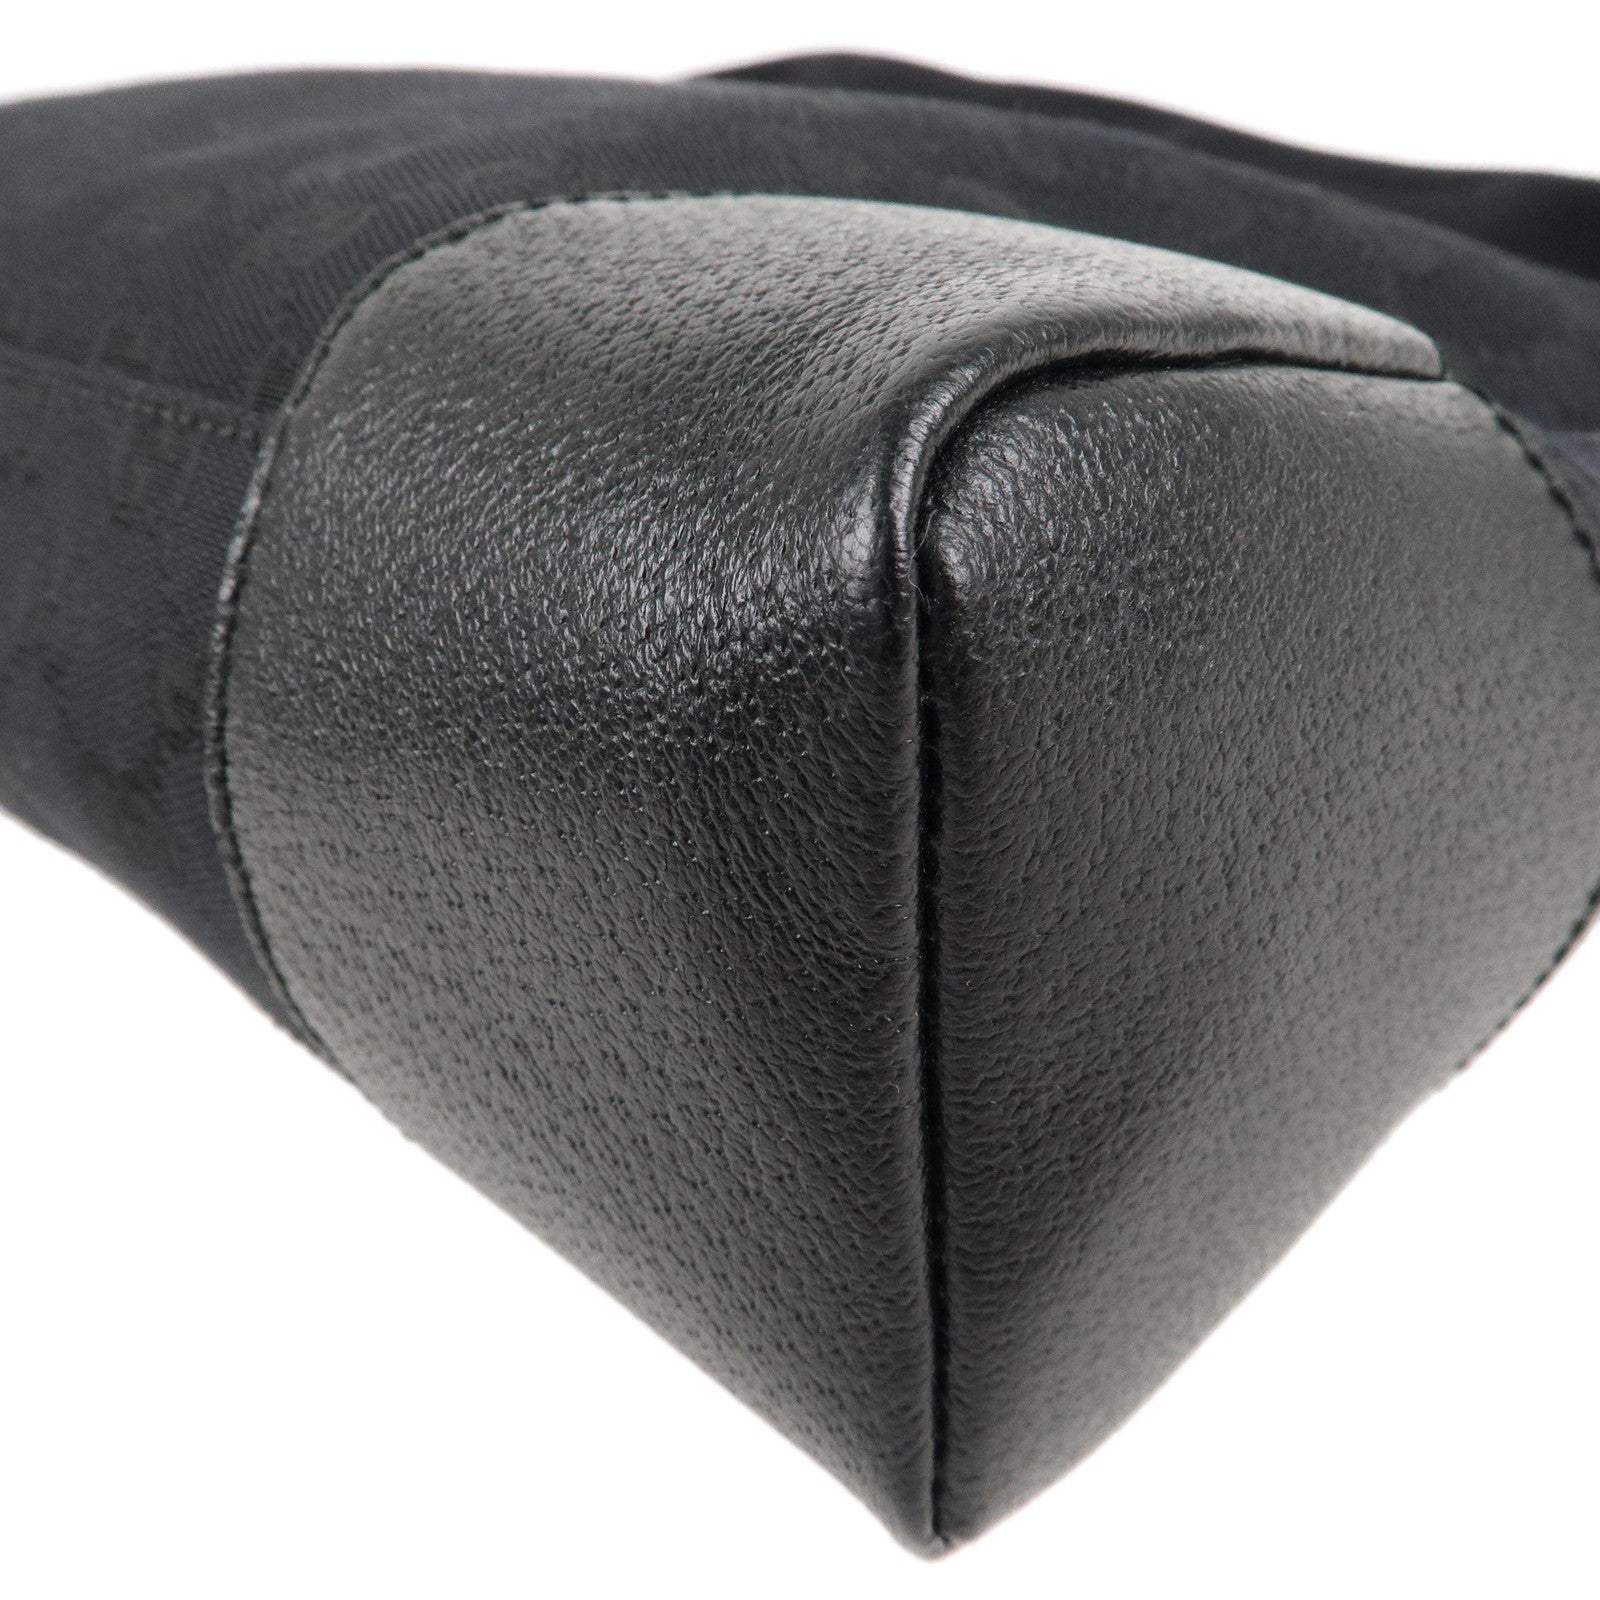 GUCCI GG Canvas Crossbody Bag Shoulder Bag Black Zip Leather Strap 114273